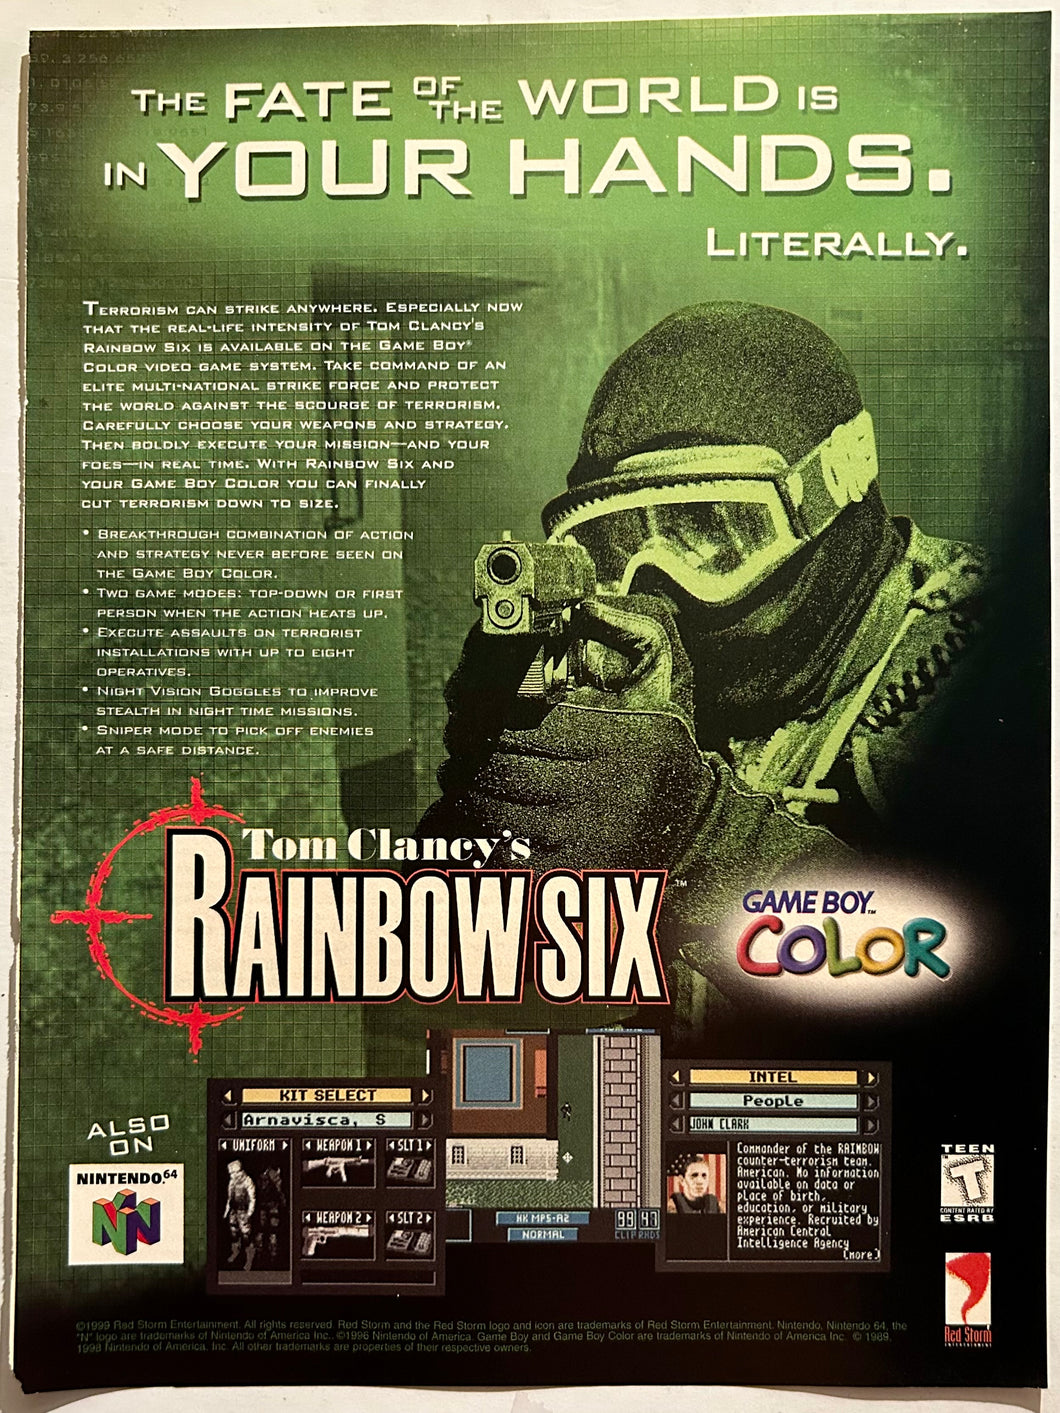 Tom Clancy’s Rainbow Six - GBC - Original Vintage Advertisement - Print Ads - Laminated A4 Poster